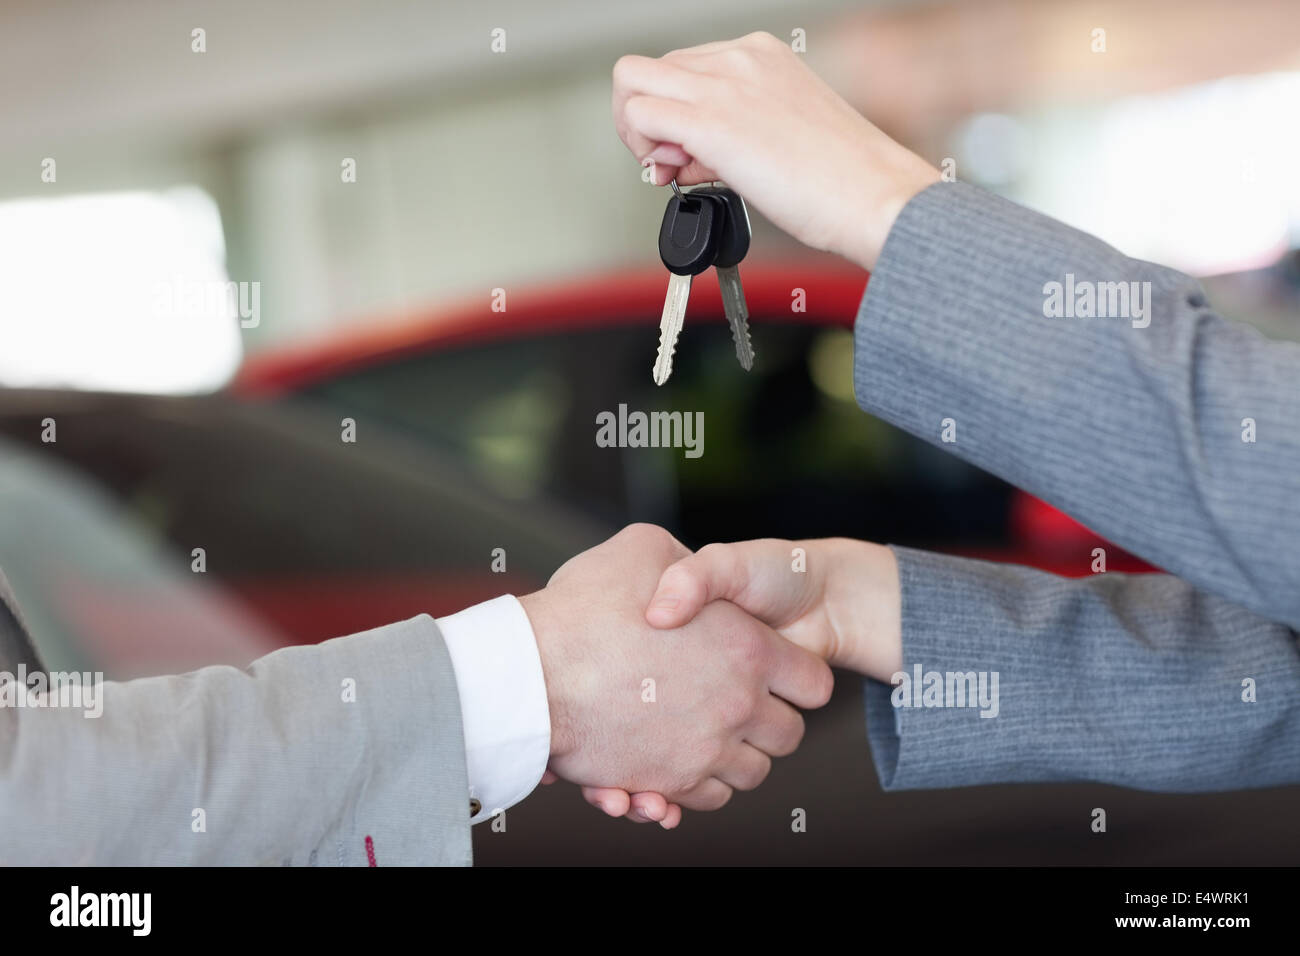 Аренда автомобиля в области. Вручает ключи от машины. Вручение автомобиля. Вручение ключей от машины. Ключи от машины в руке.